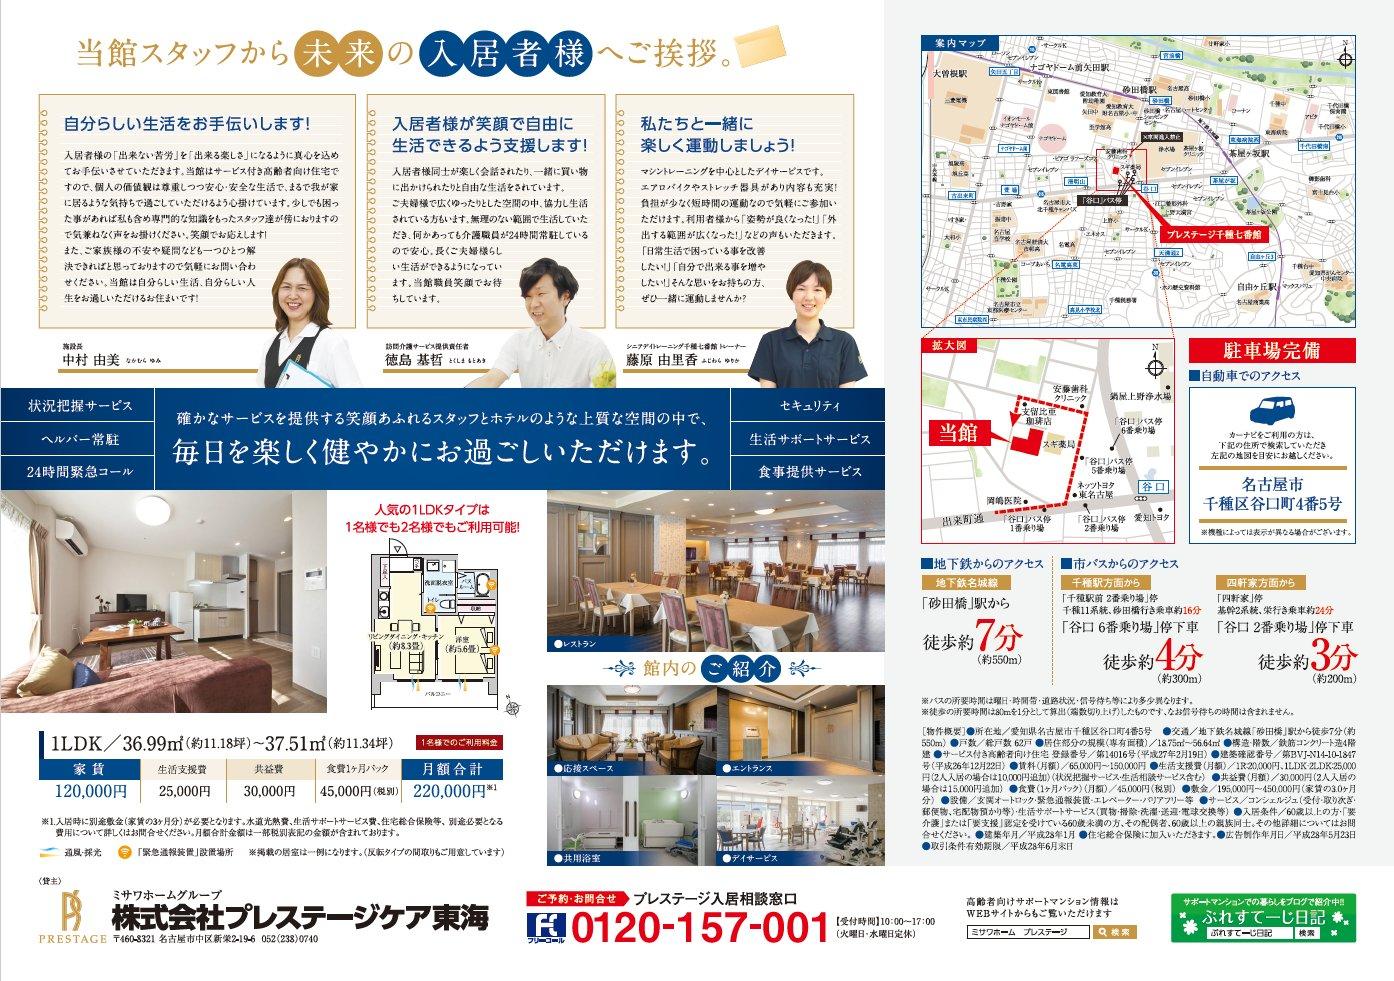 http://www.prestige-care-tokai.co.jp/information/images/3mQg6nqx7u.jpg